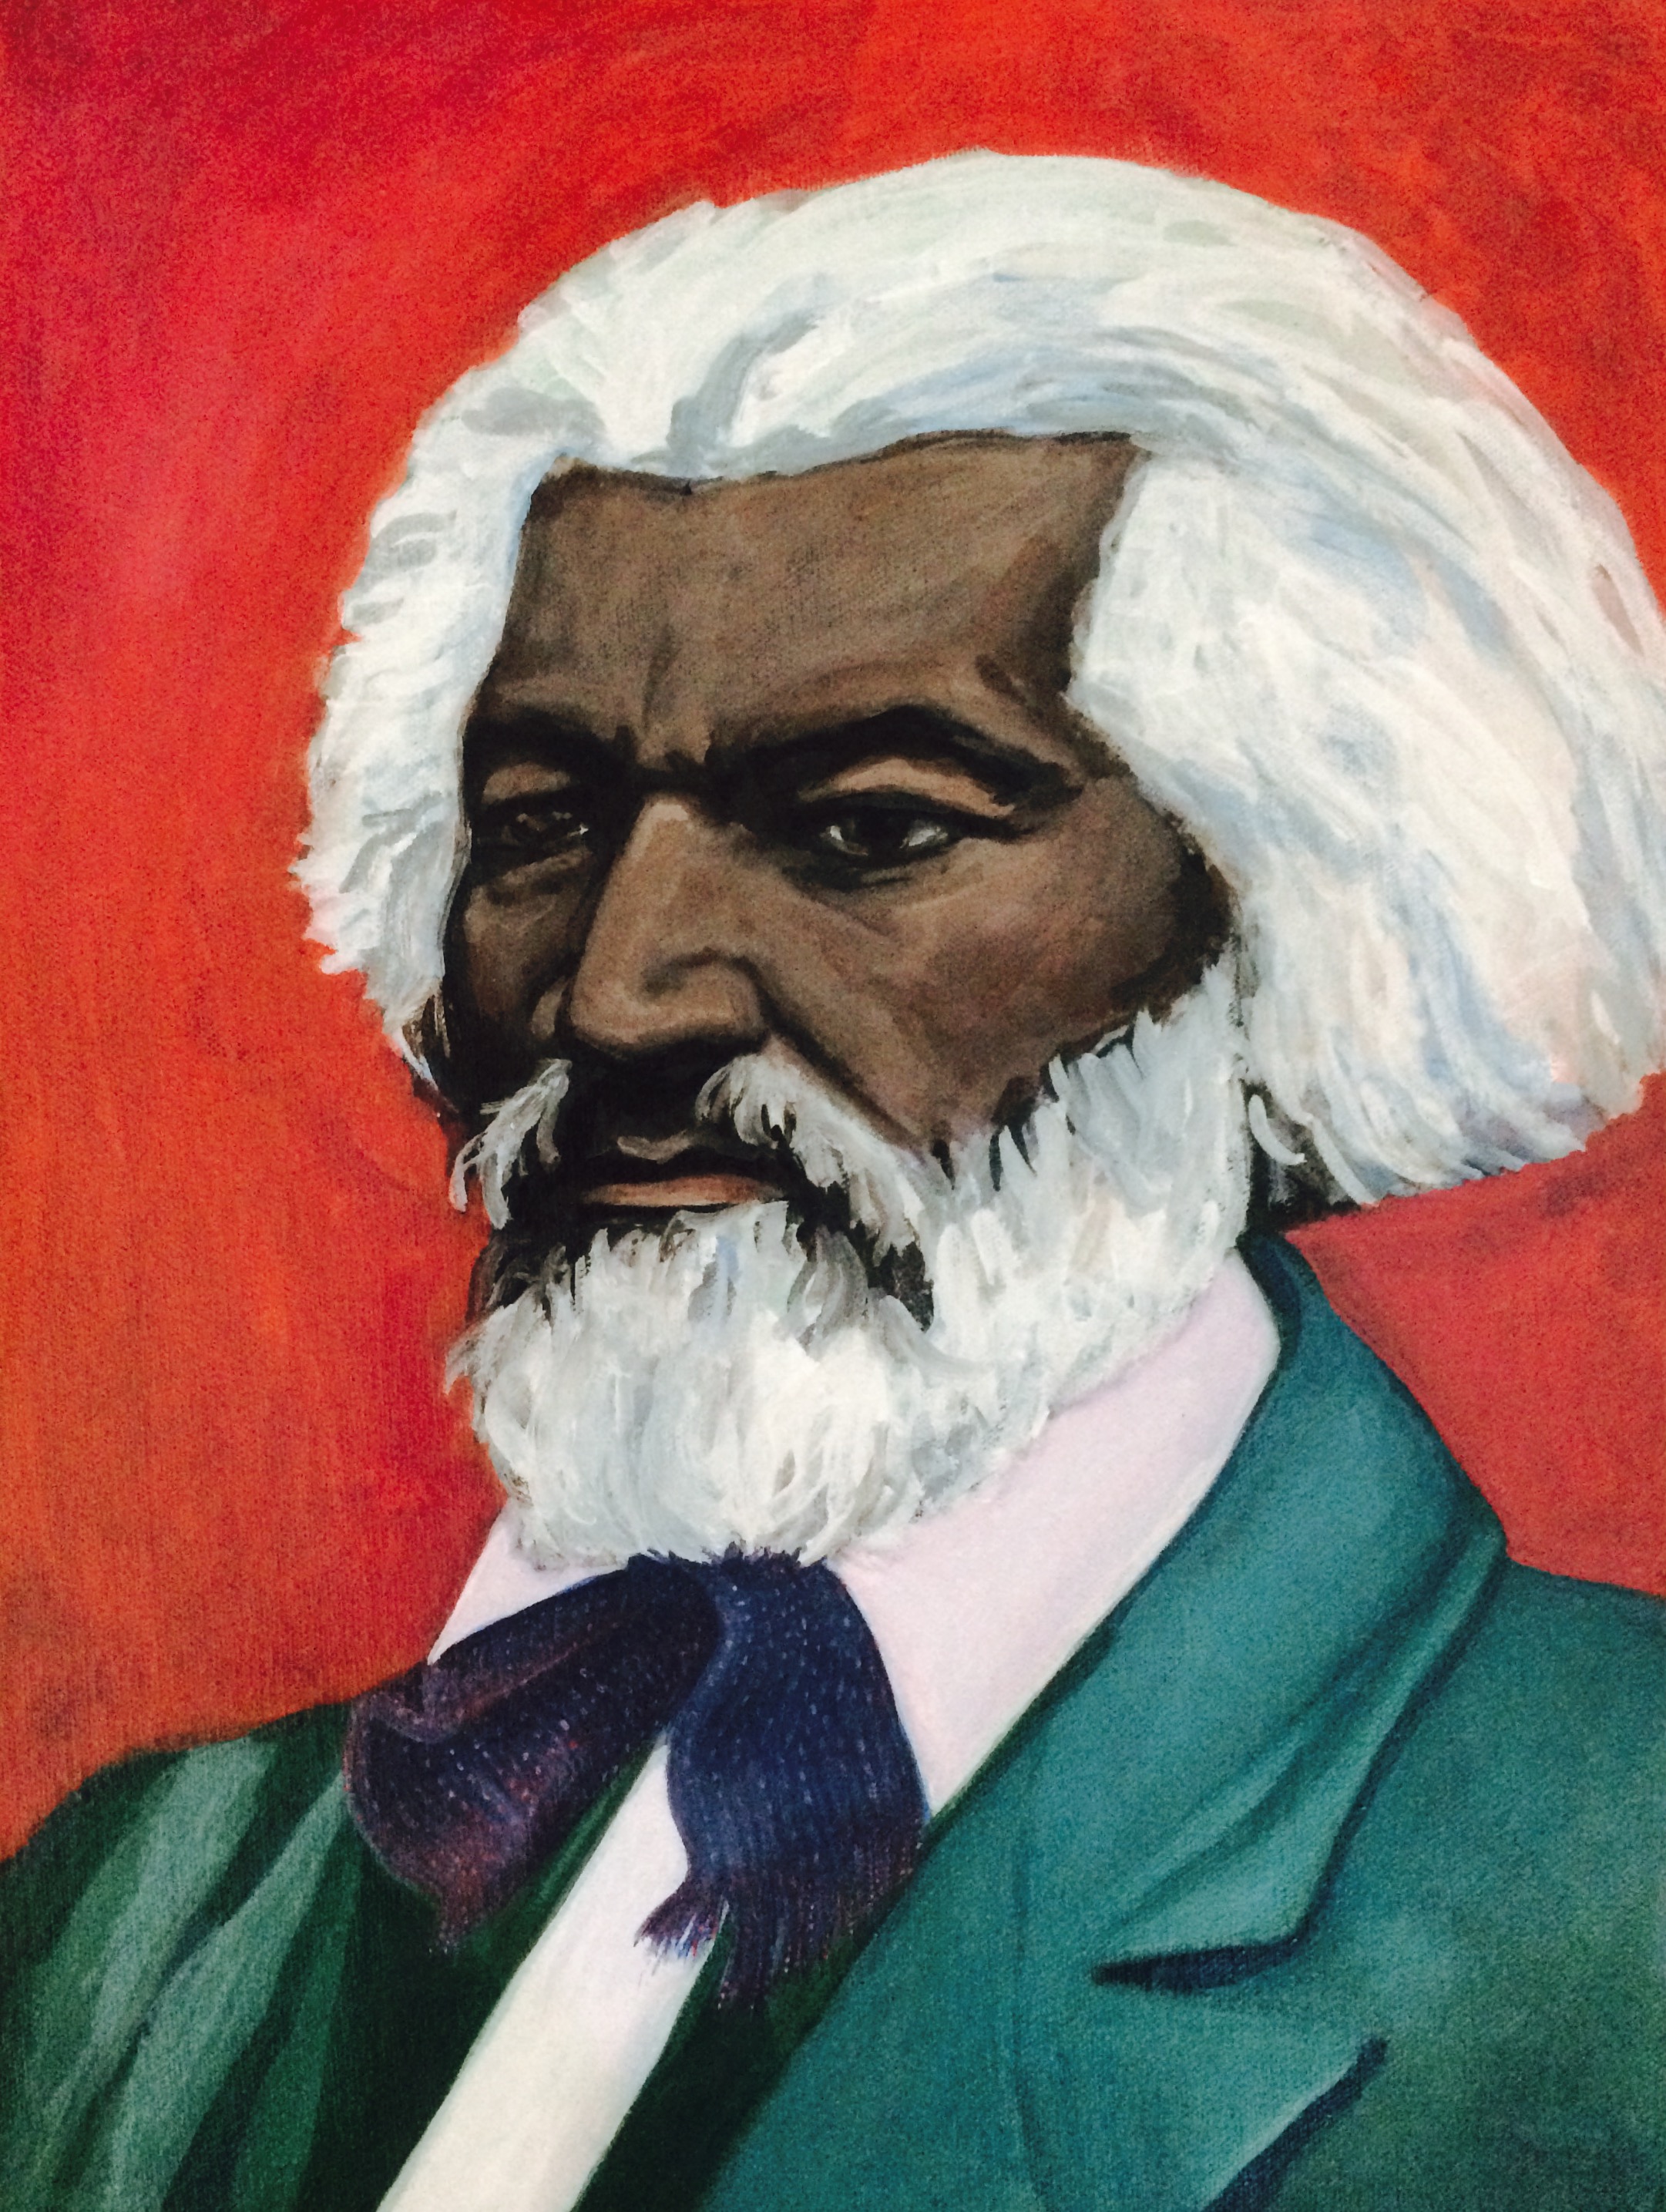   Frederick Douglass   acrylic, gouache, watercolor on canvas panel  16 x 12 inches,&nbsp;2016   (sold)  